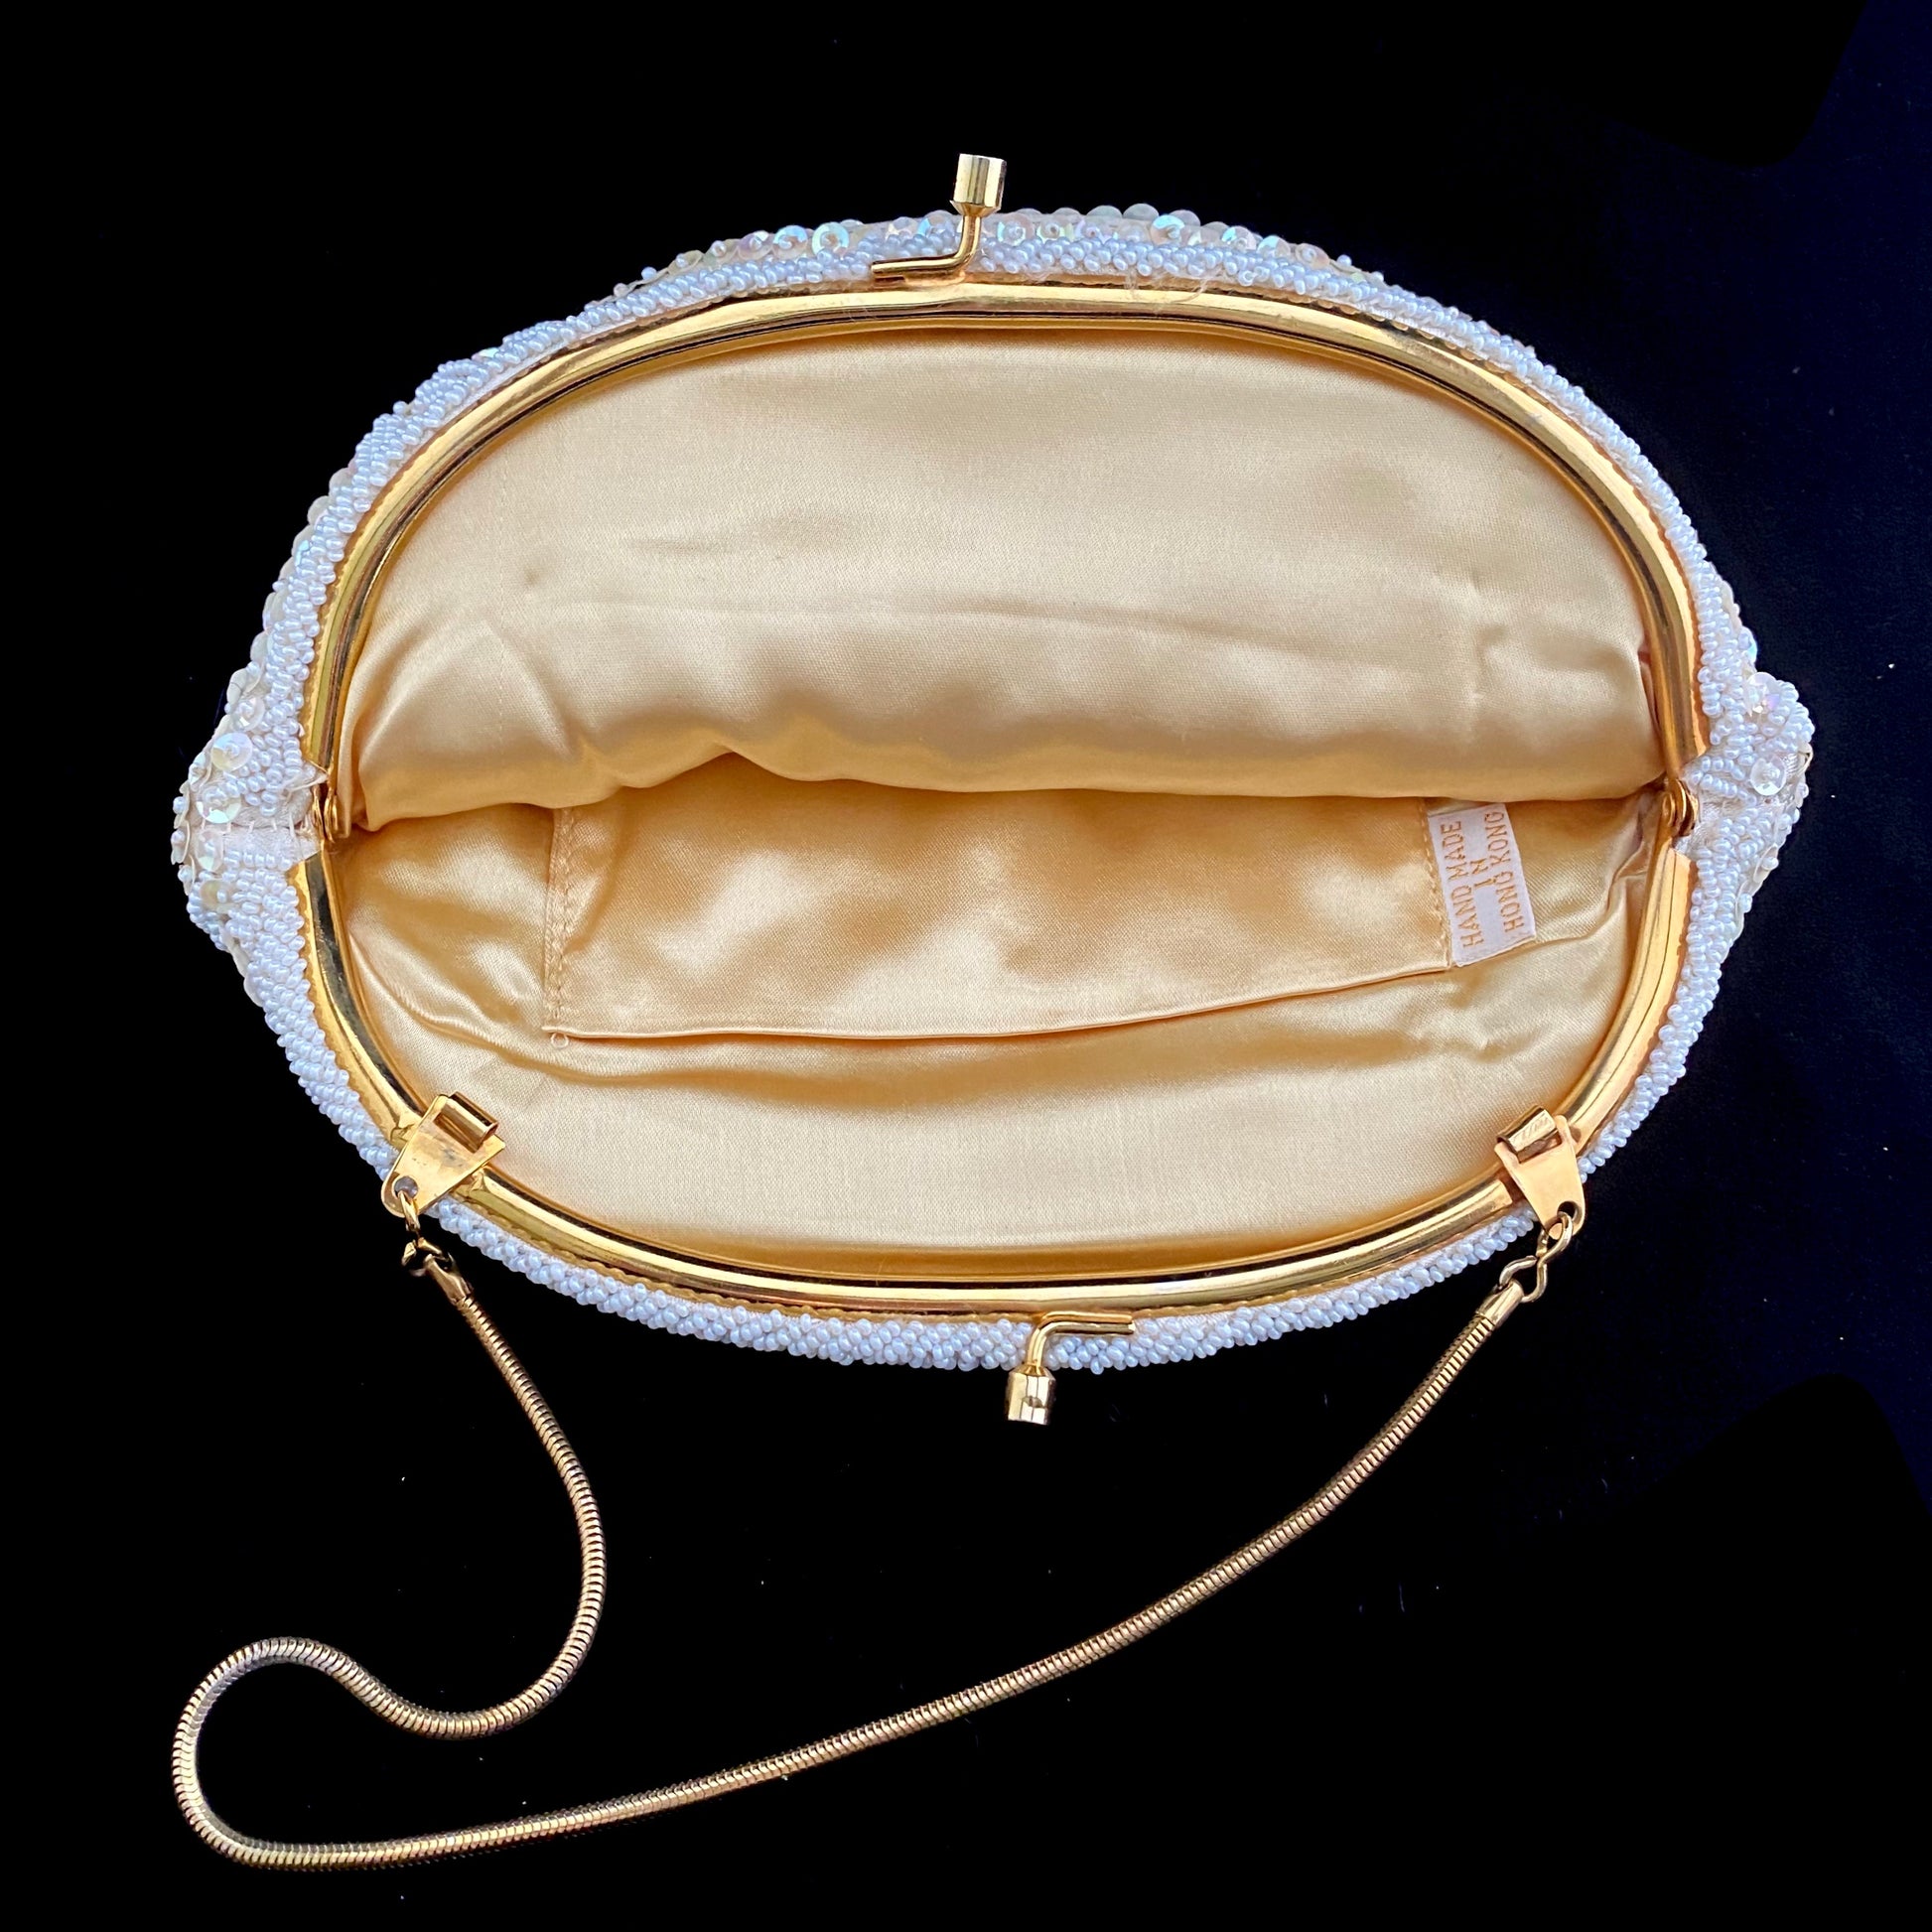 Vintage Seed Bead Handbag La Regale Original Made in Japan 